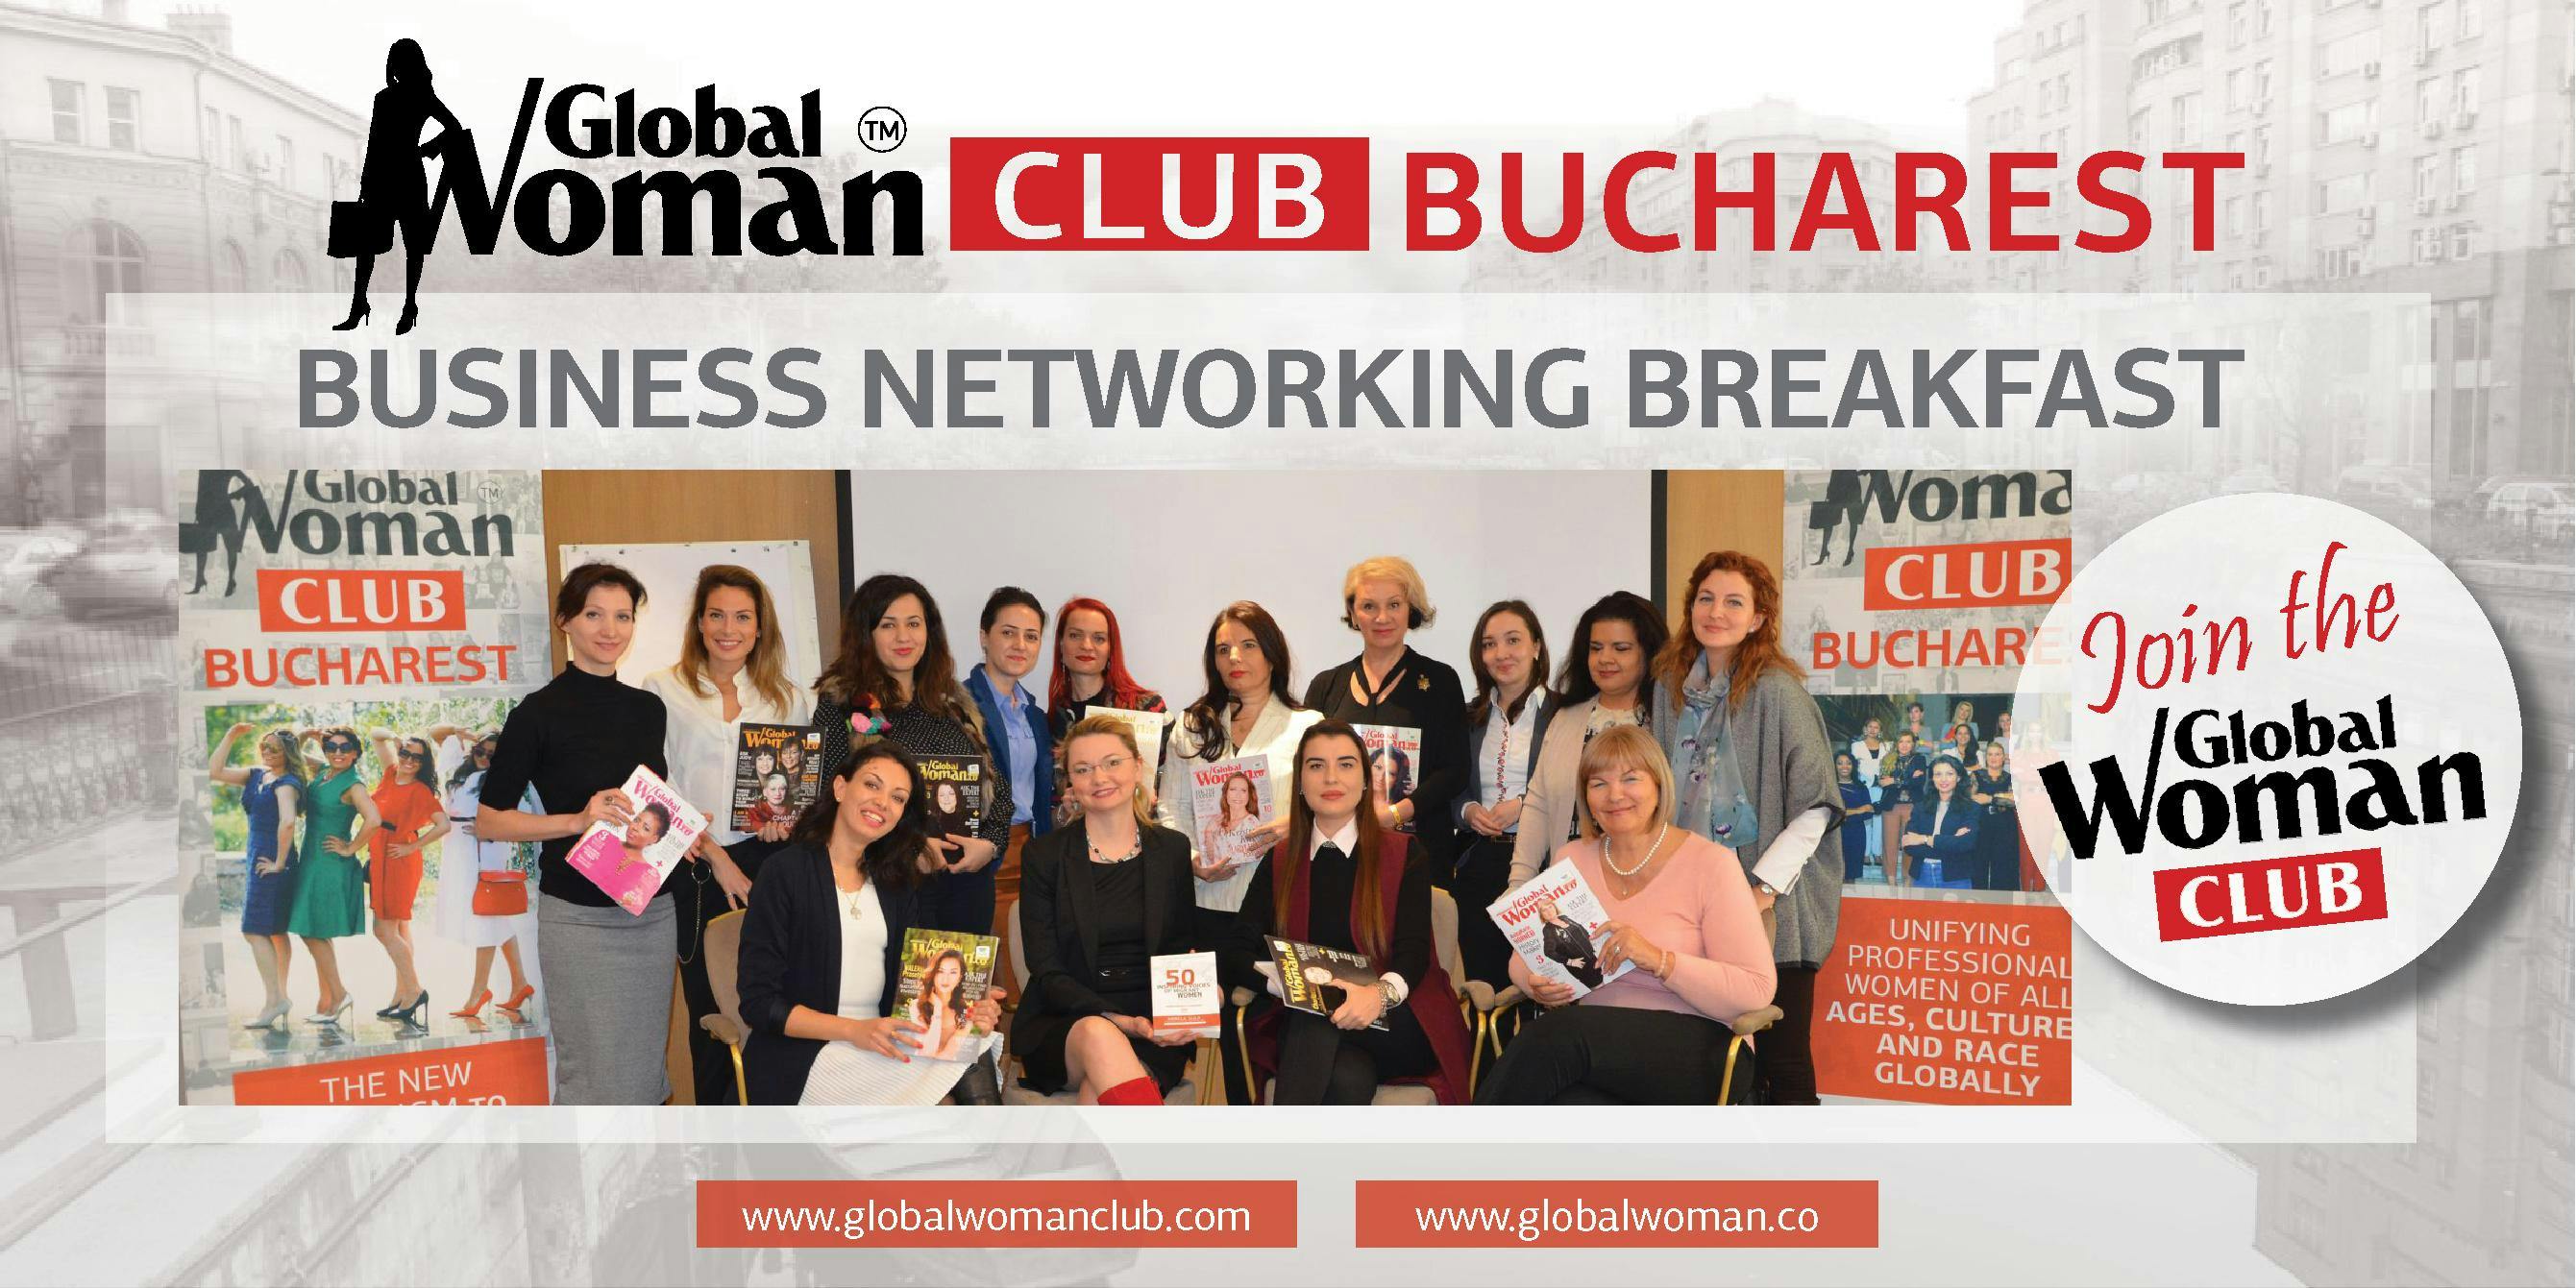 GLOBAL WOMAN CLUB BUCHAREST: BUSINESS NETWORKING BREAKFAST - JUNE